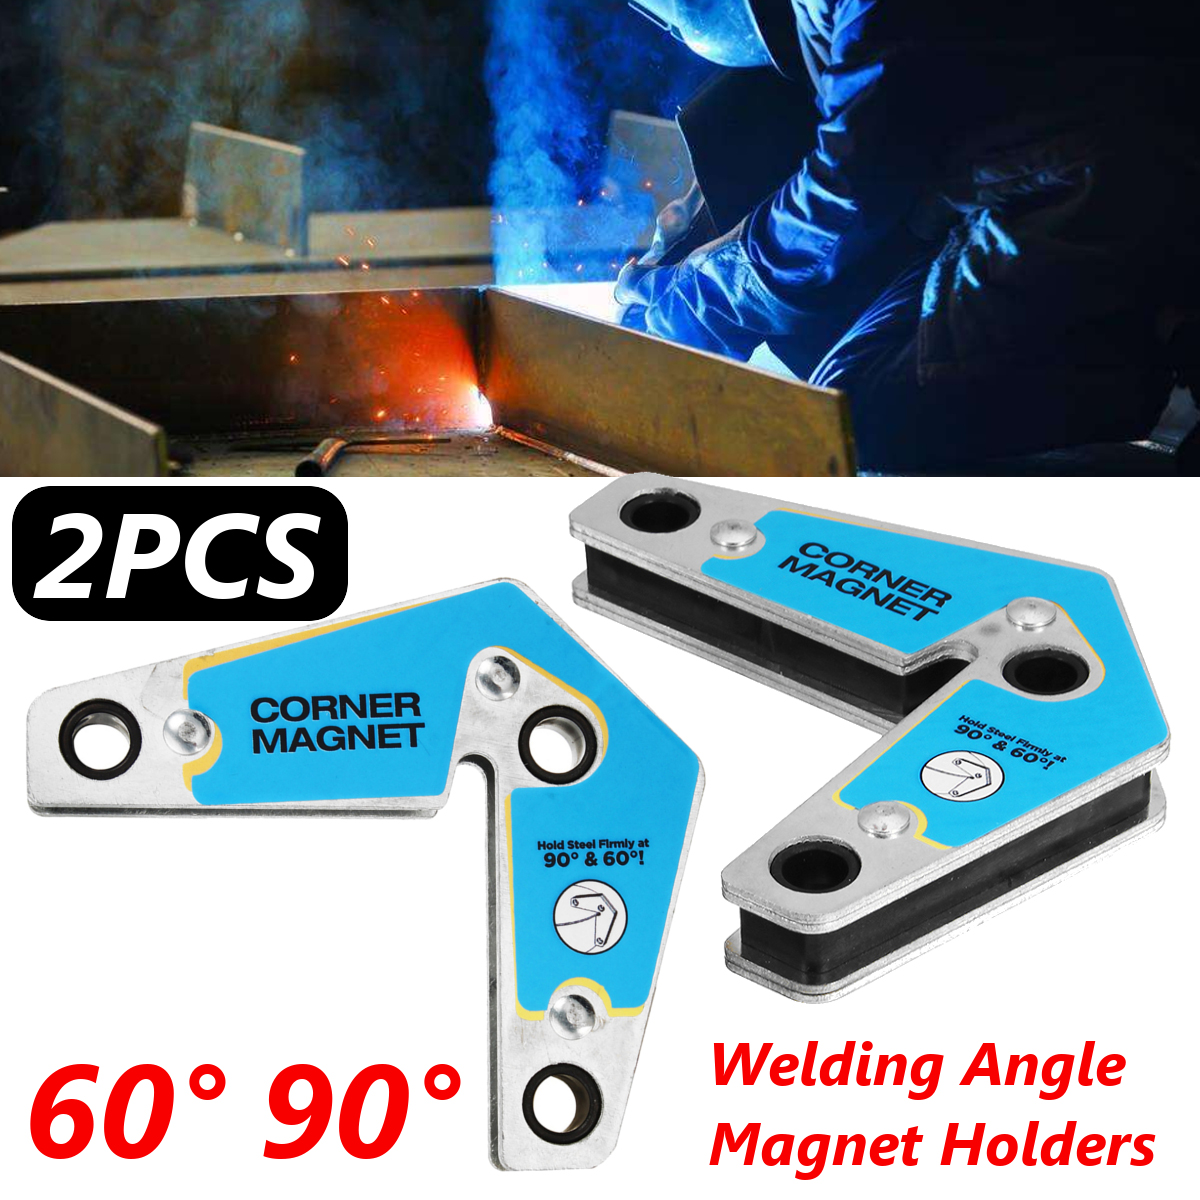 2pcs-Magnetic-Welding-Holders-Corner-Magnet-Holder-Dual-Use-6090-Degree-Soldering-Tools-1379167-2